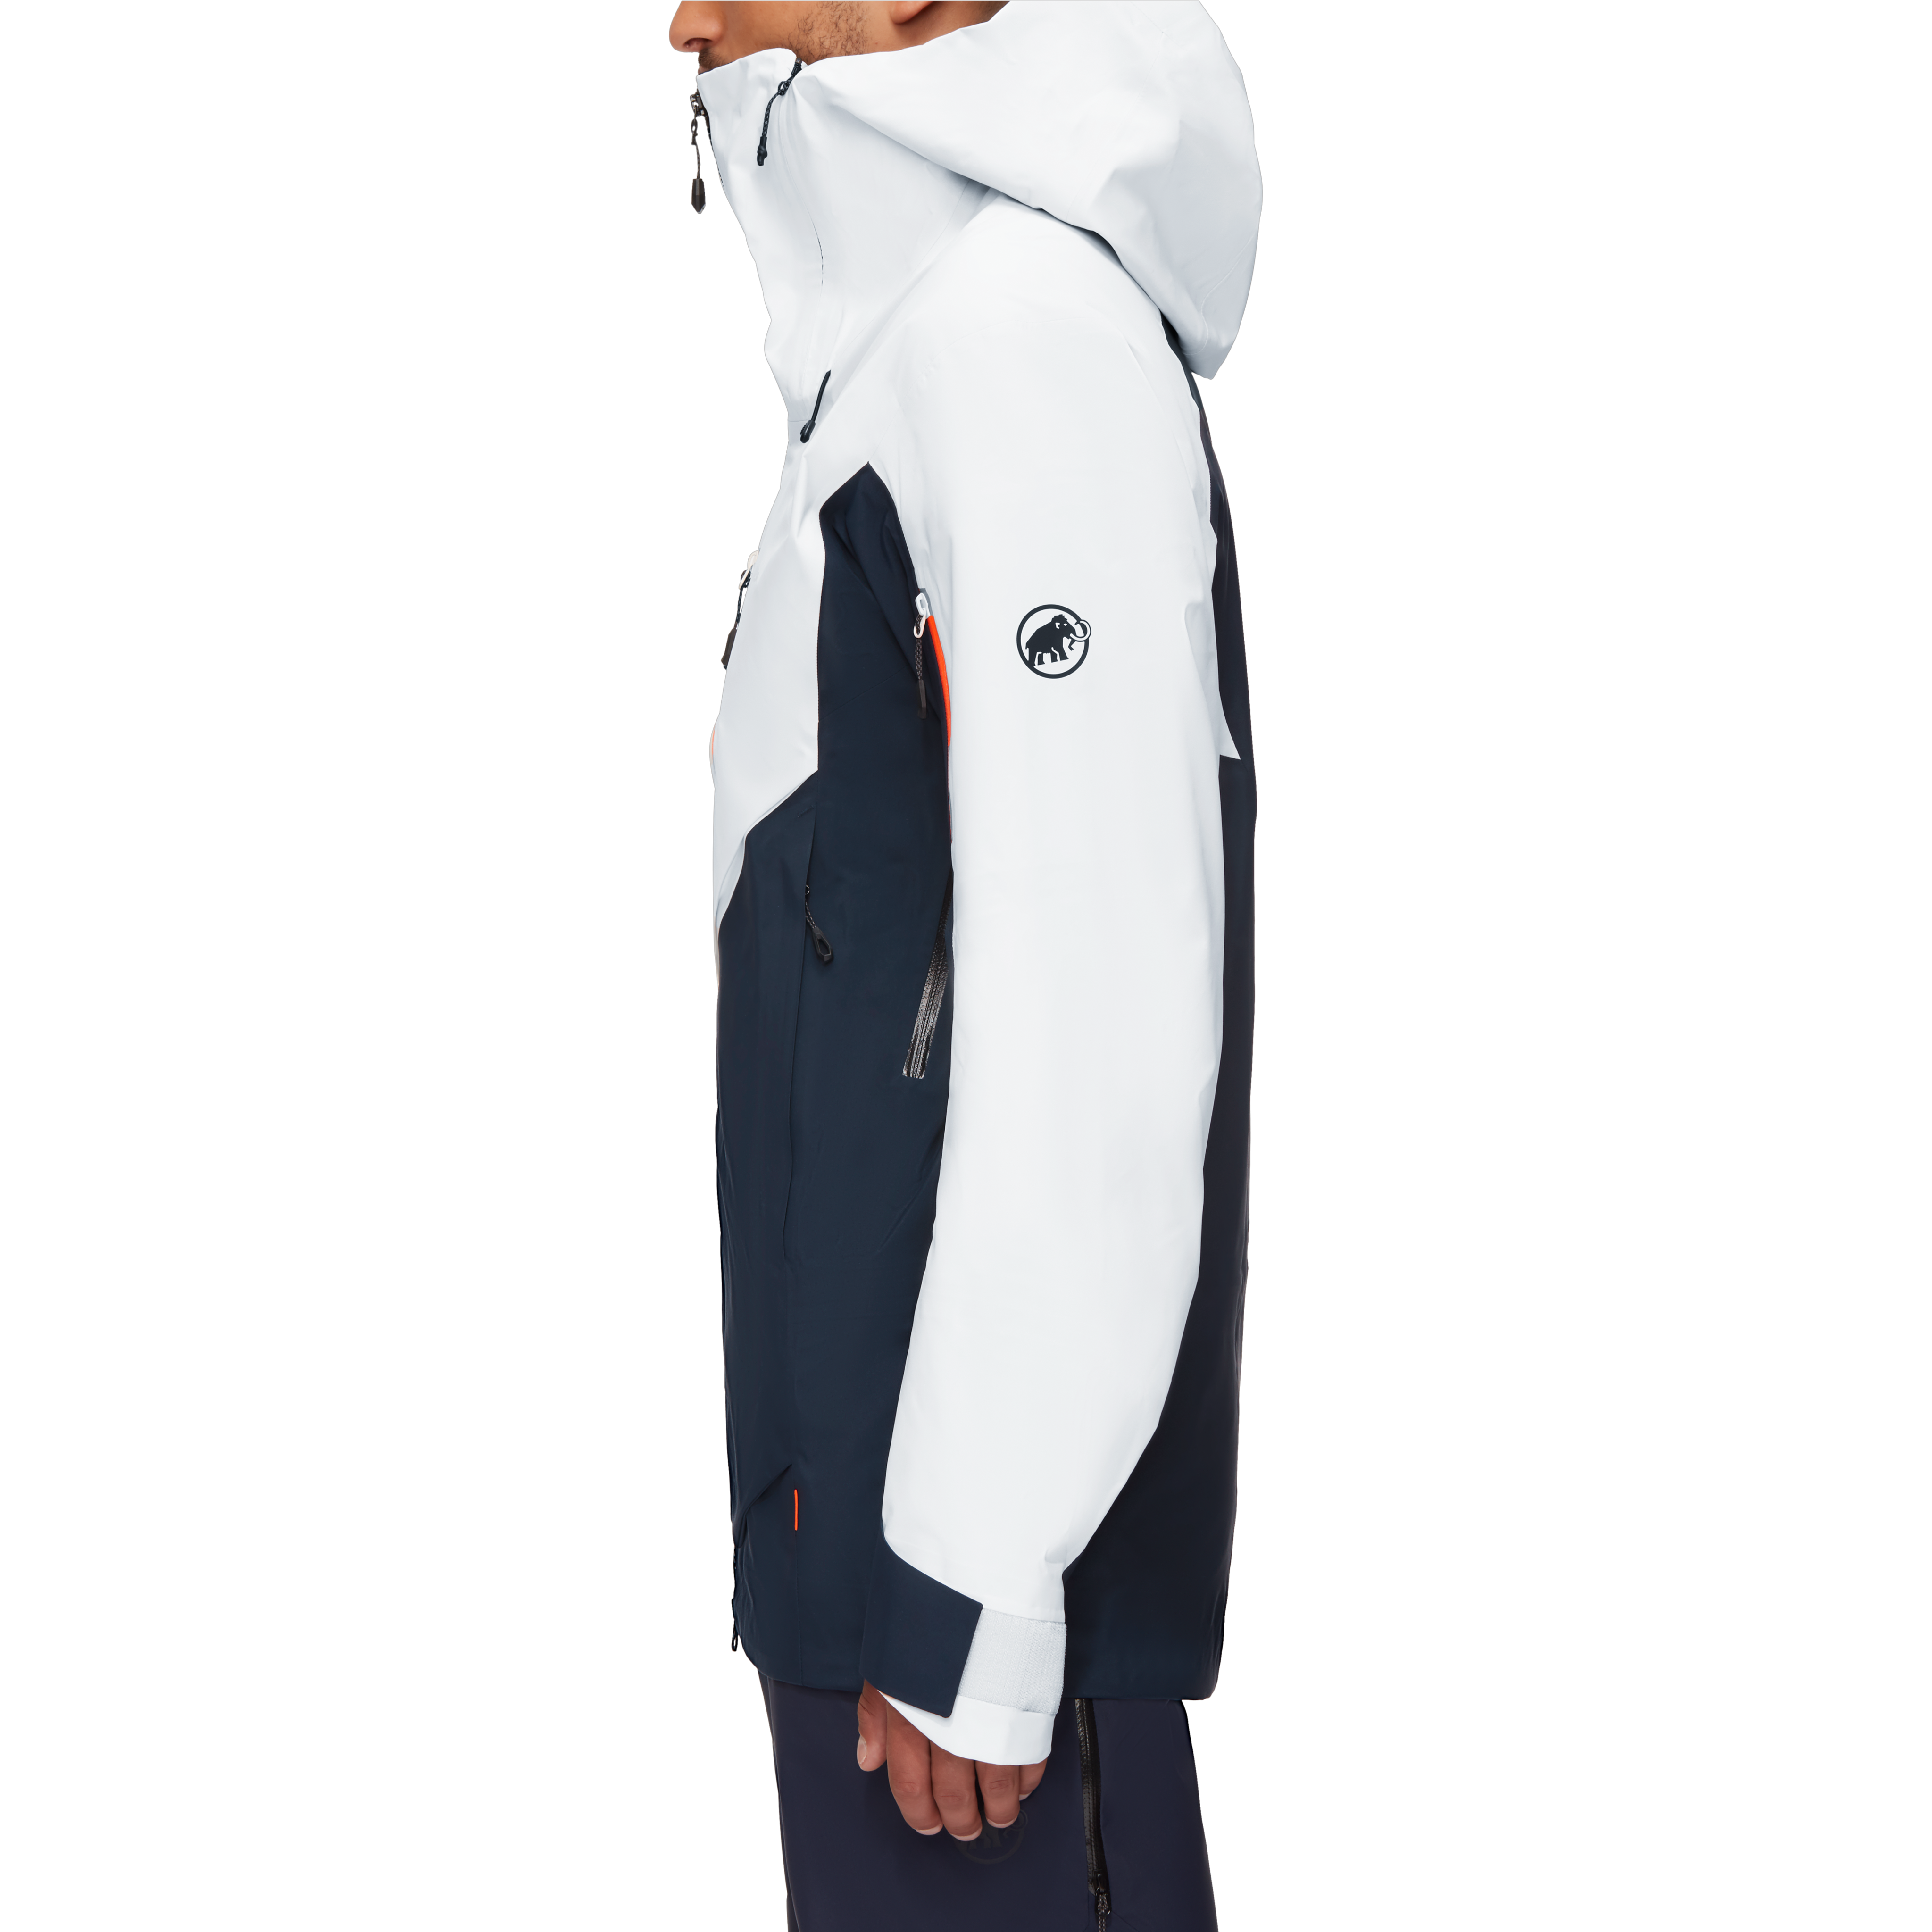 La Liste Pro HS Hooded Jacket Men product image